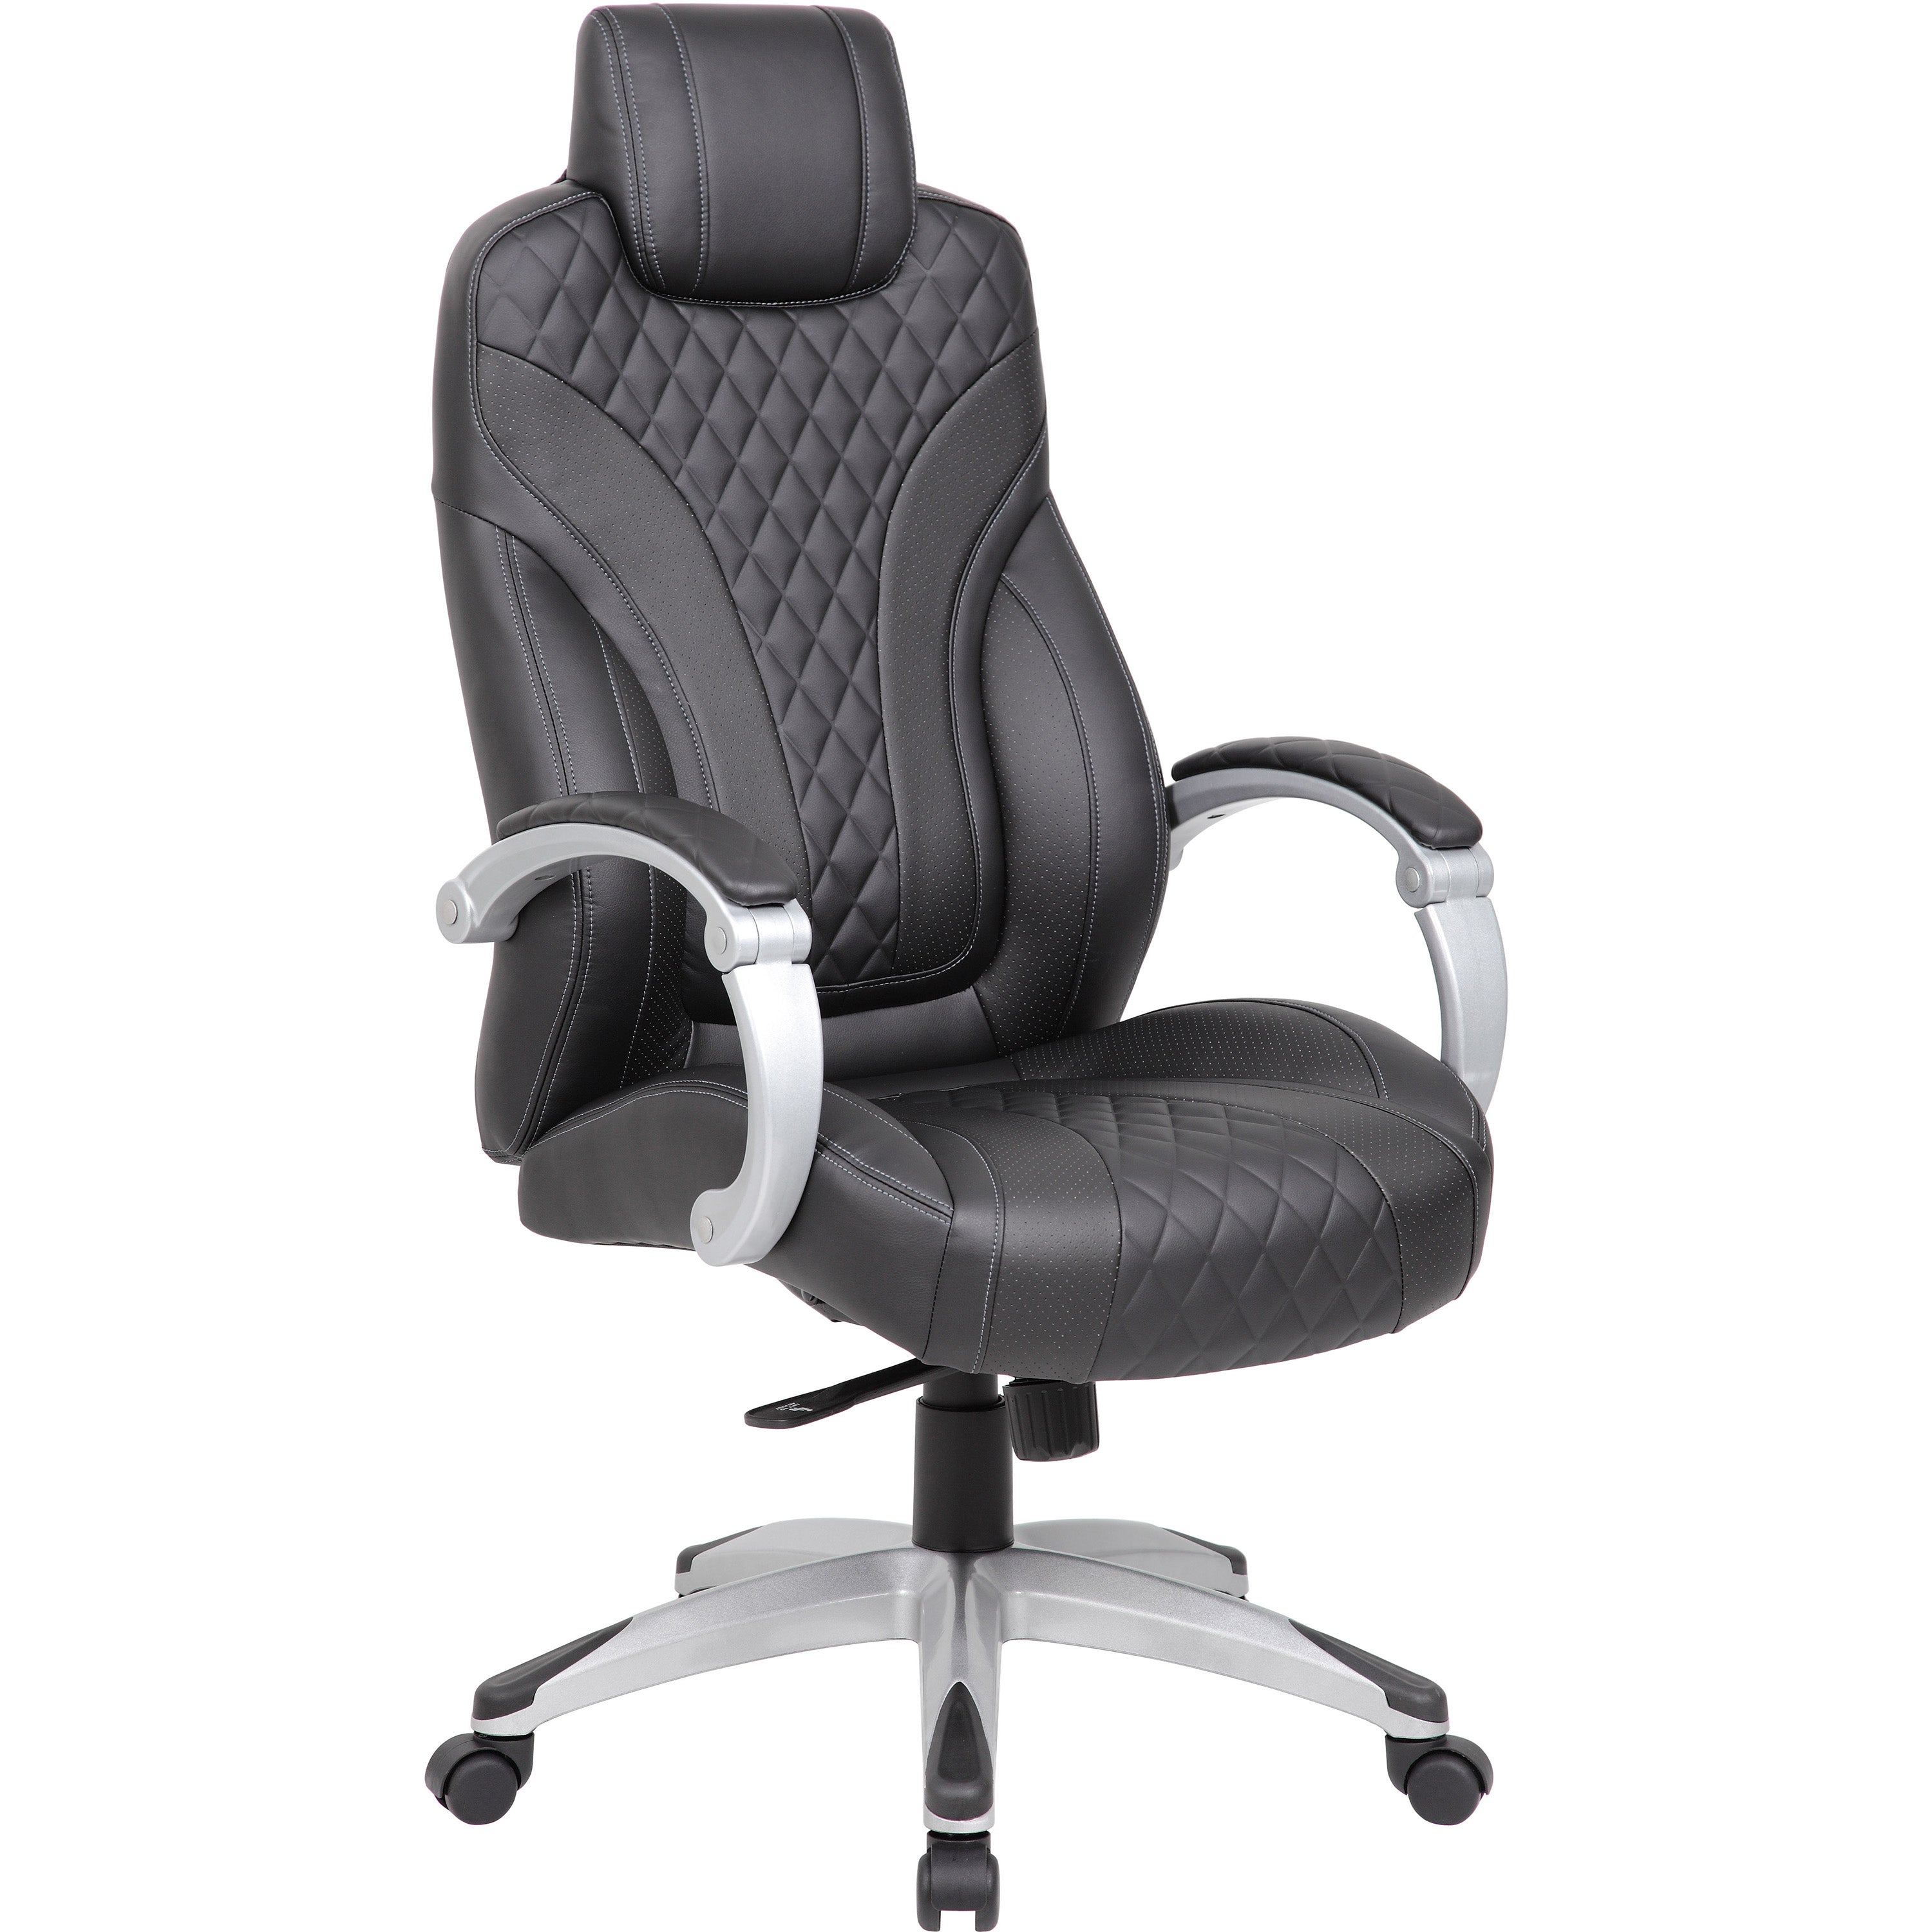 Executive Hinged Arm Chair - Black/Grey, B8871-BKGY